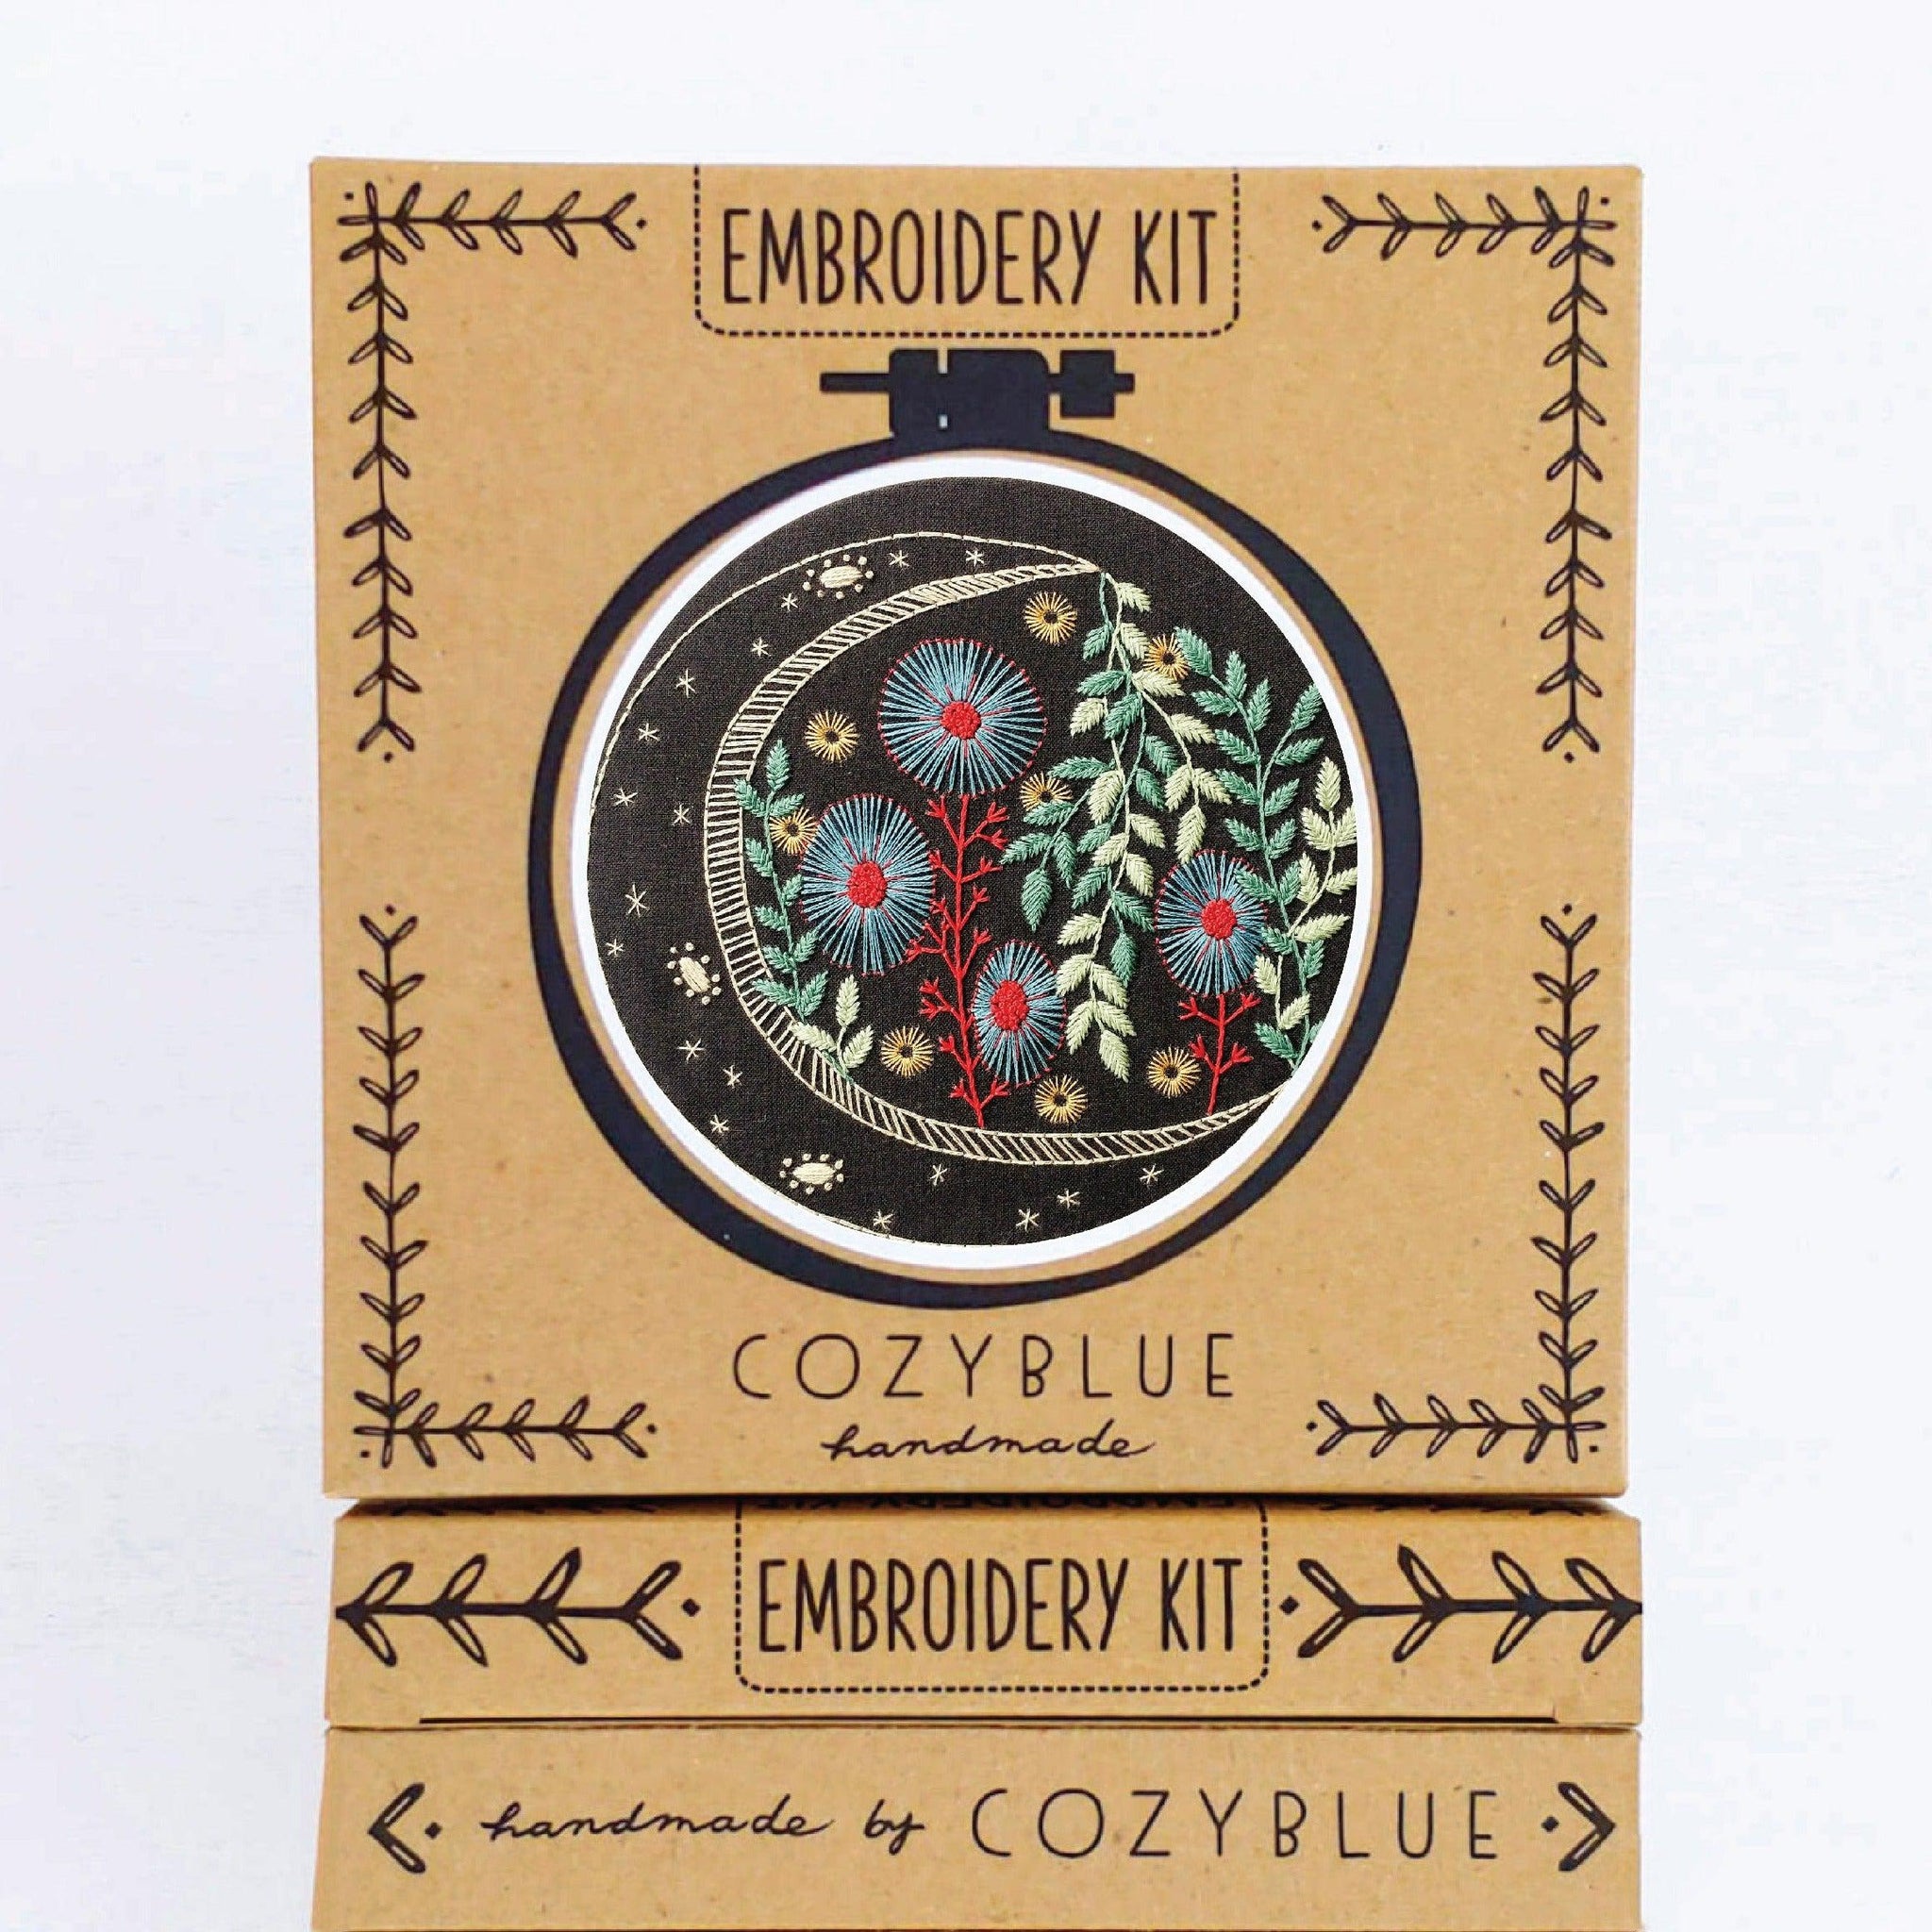 CozyBlue - Night Garden Embroidery Kit - Default - gatherhereonline.com